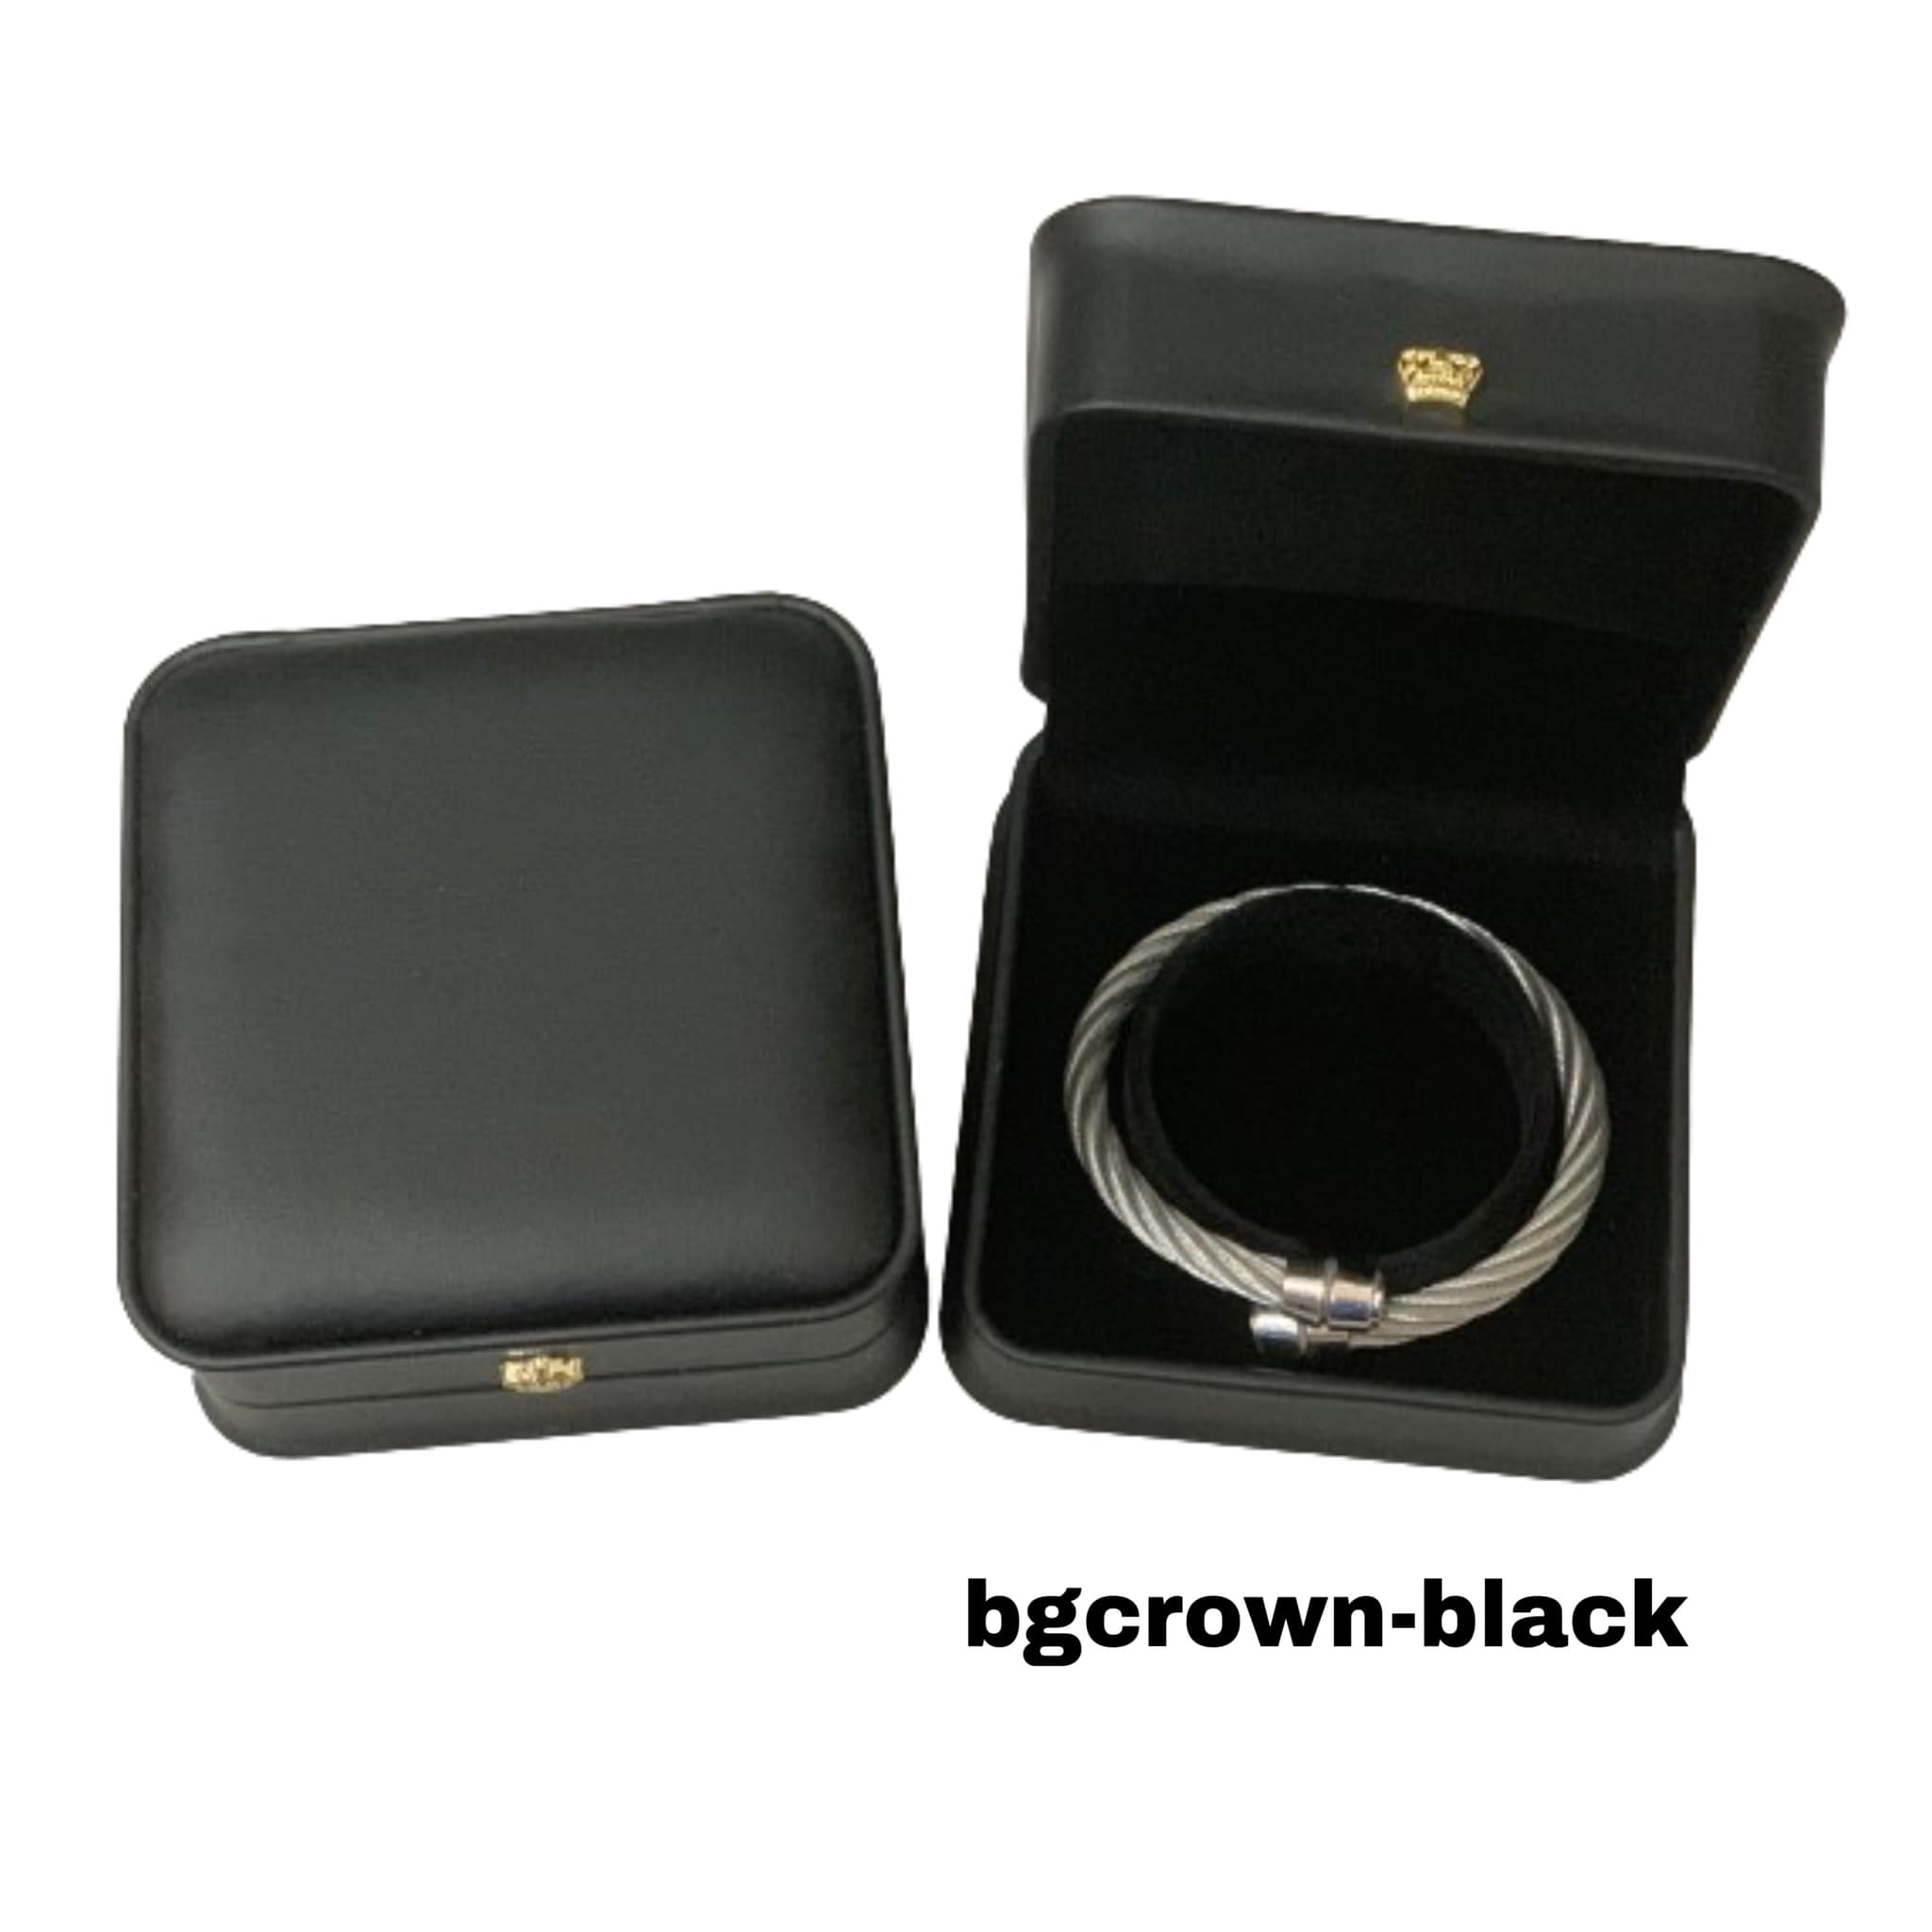 bgcrown-black